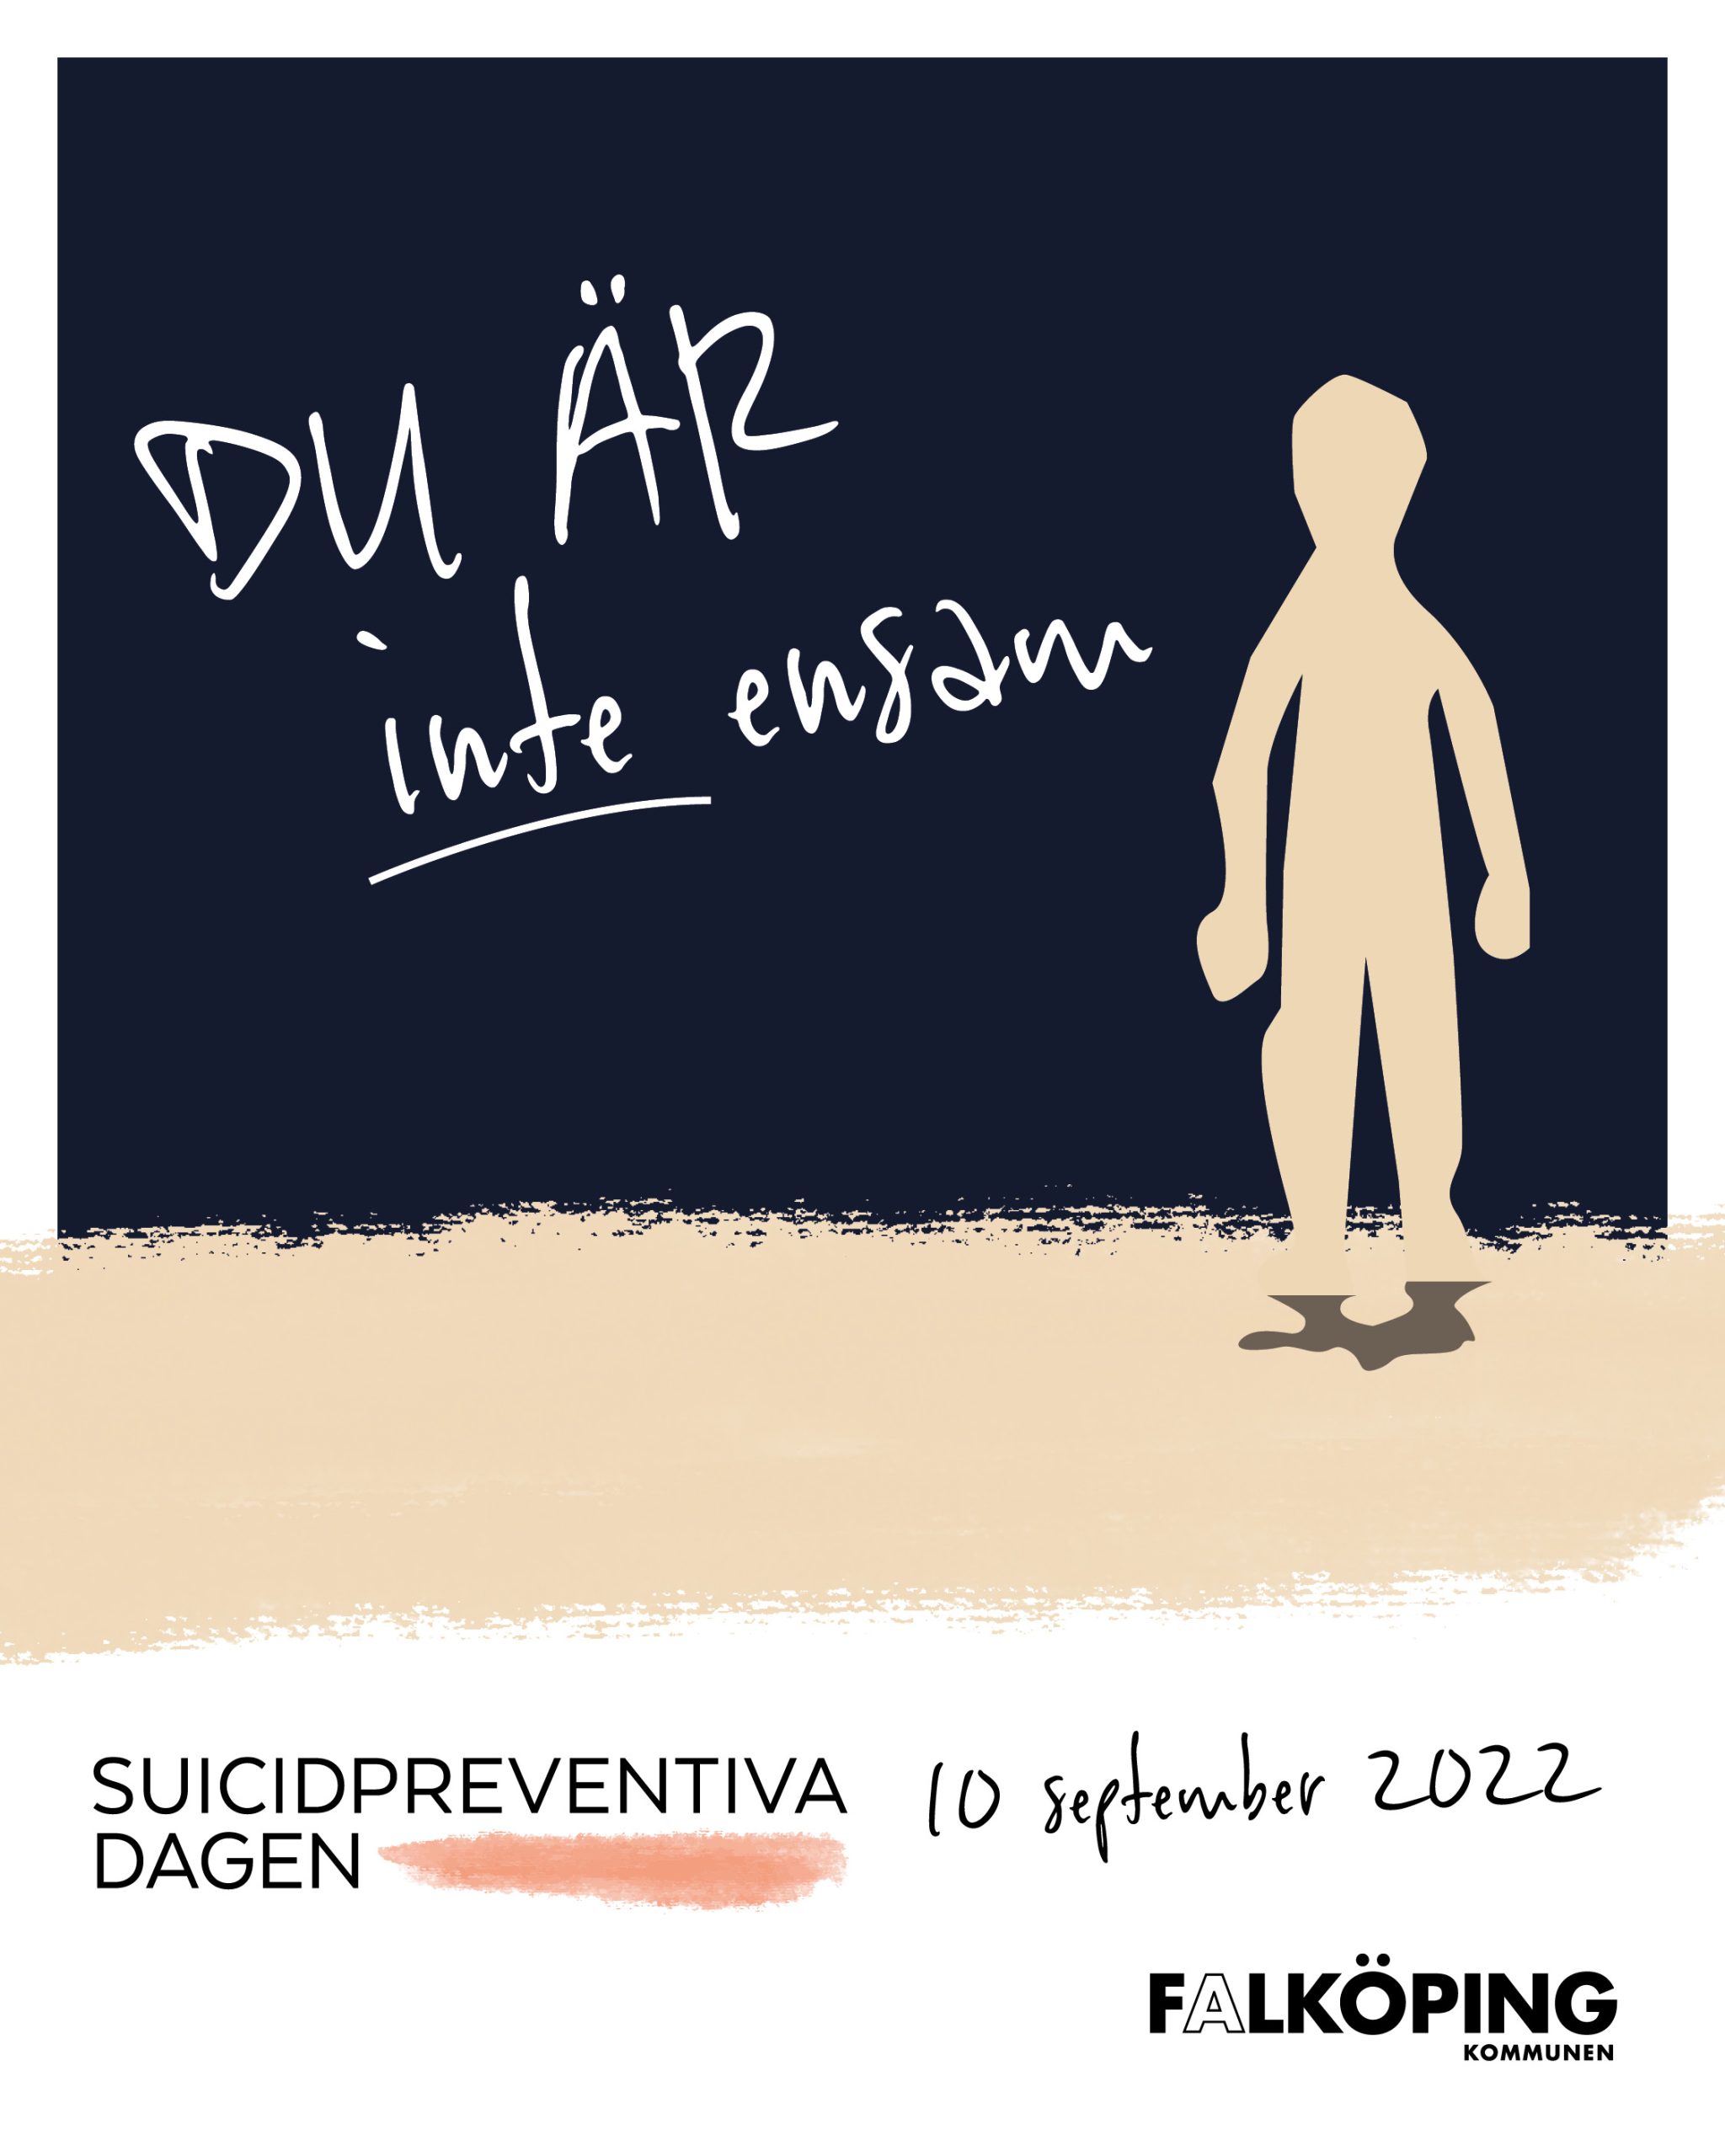 Suicidpreventiva dagen i Falköpings, Illustration för suicidpreventiva dagen